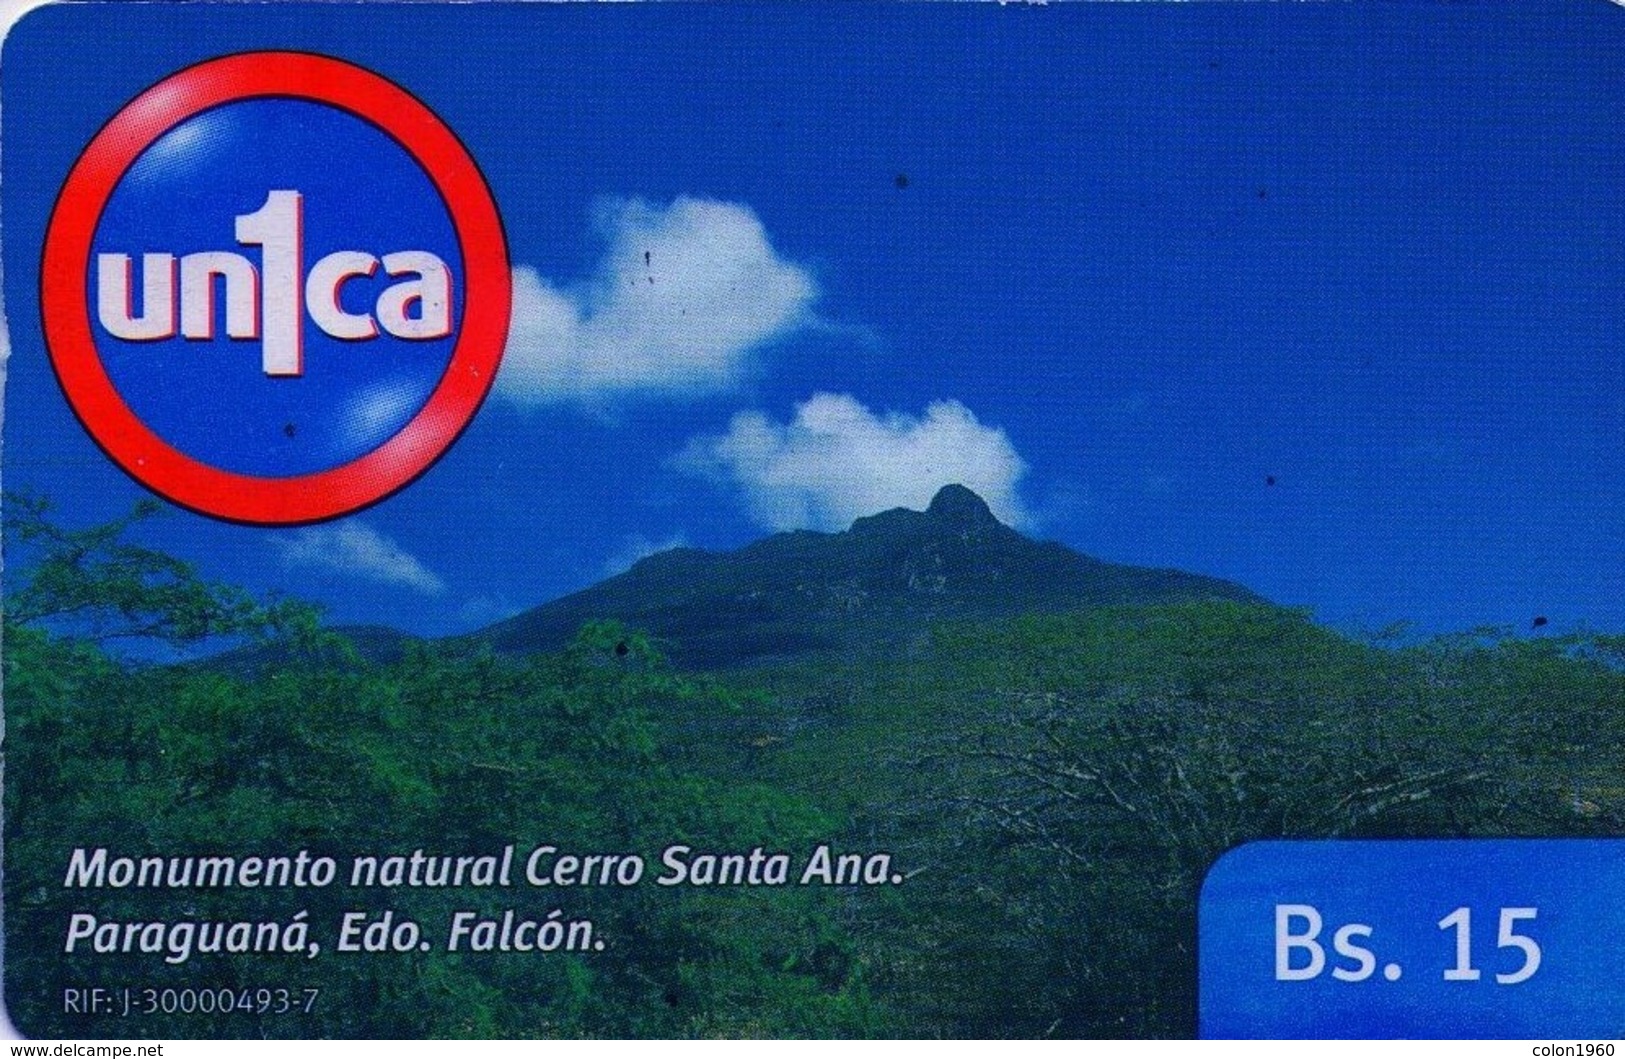 VENEZUELA, GSM-RECARGA. Monumento Natural Cerro Santa Ana. Paraguaná. Edo. Falcón. UI091009, VE-UNICA-U-091009. (239) - Venezuela